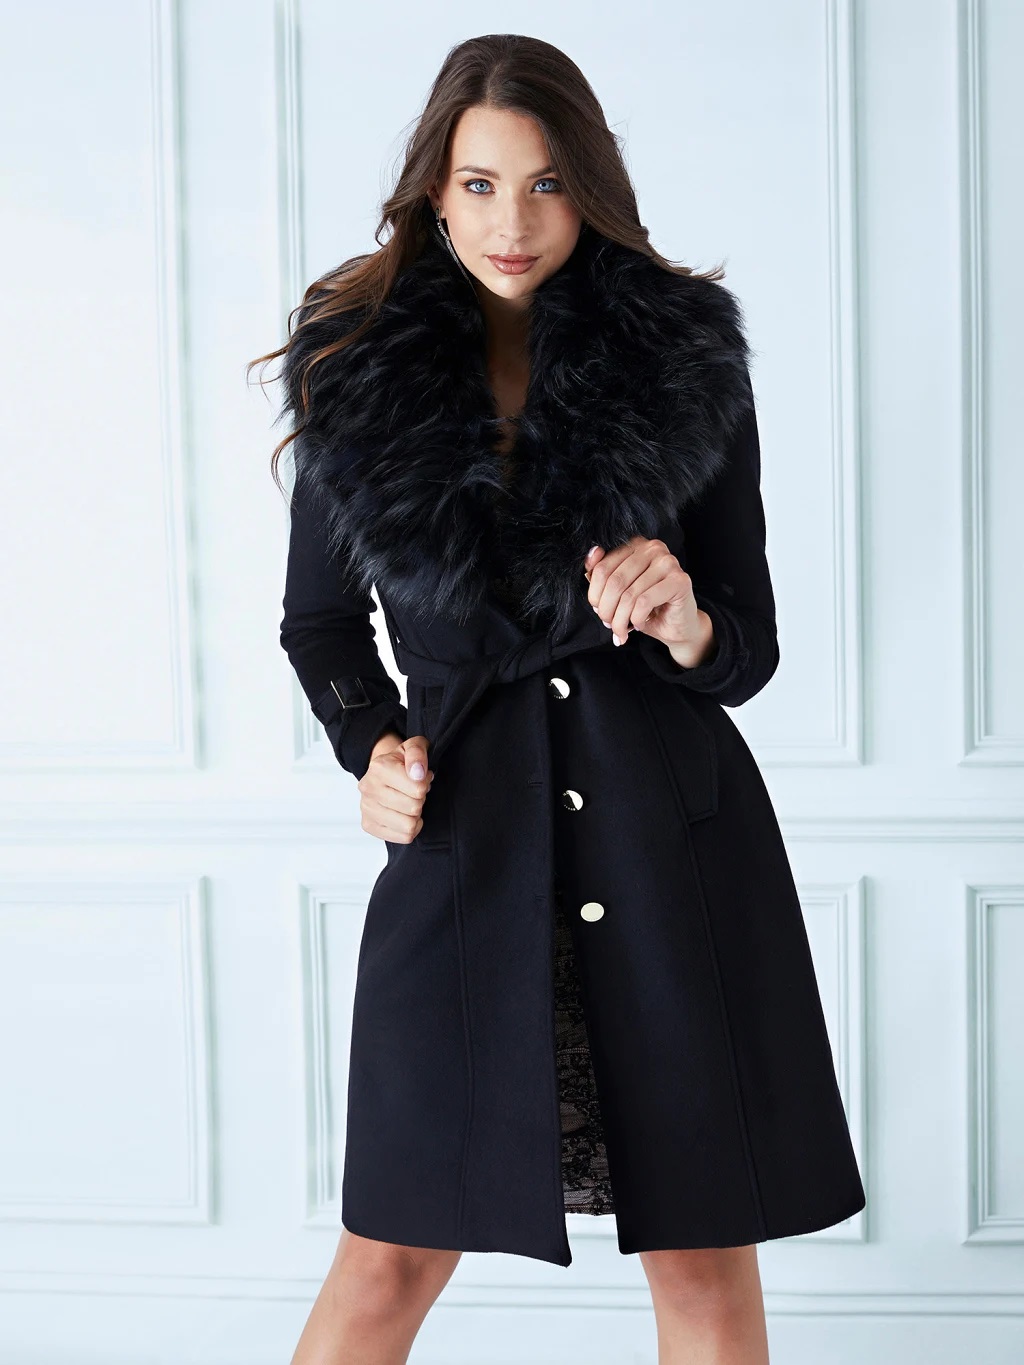 manteau hiver femme black friday